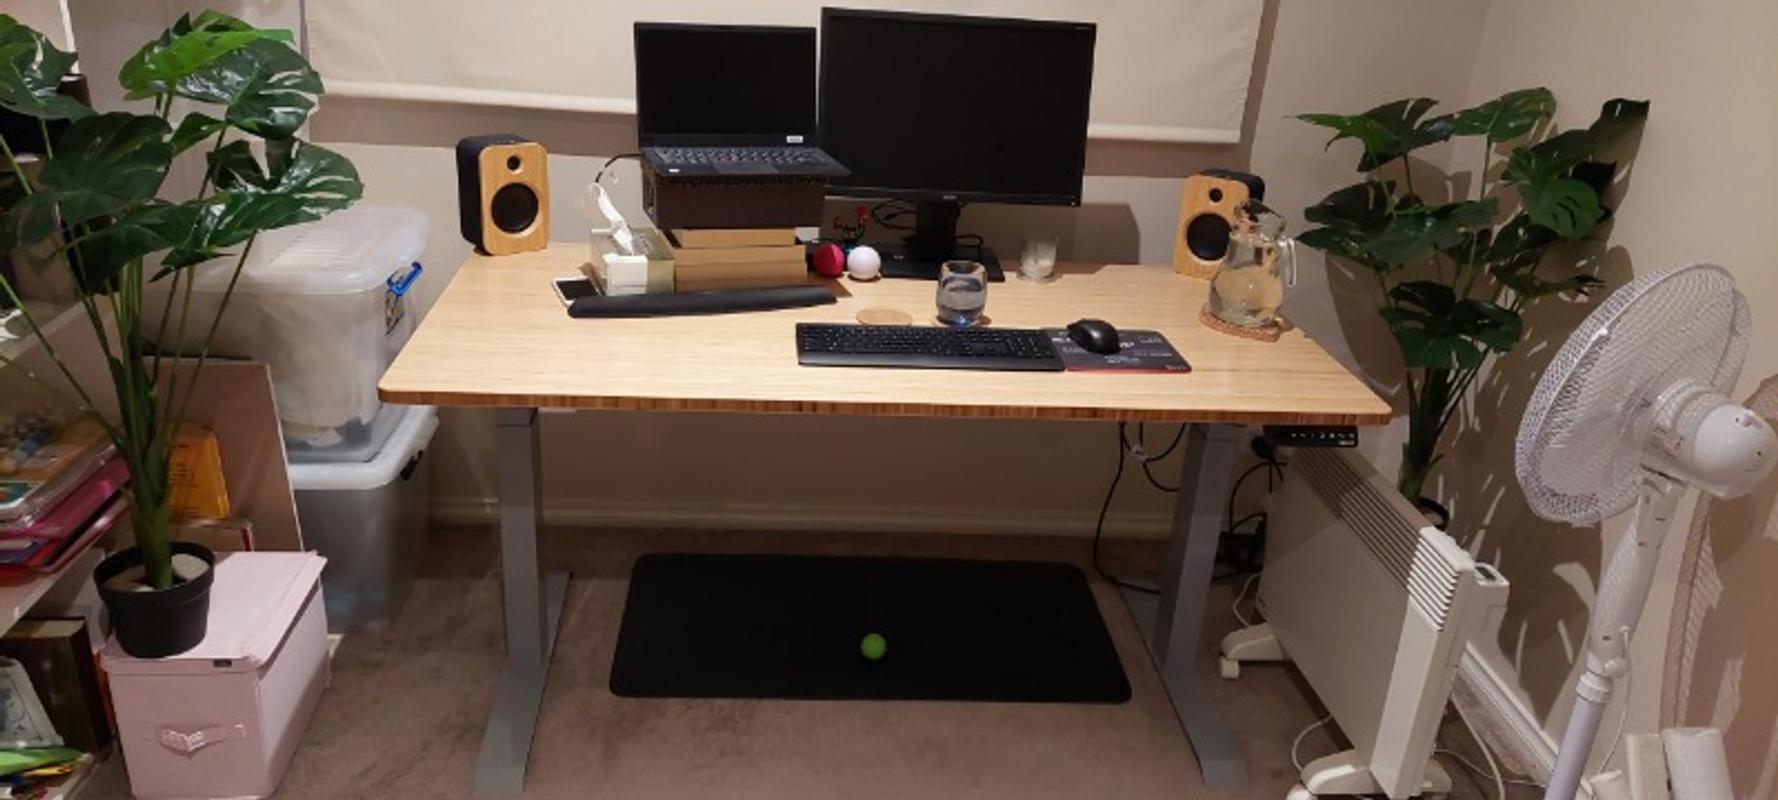 Do You Need A Mat For A Standing Desk? - Desky